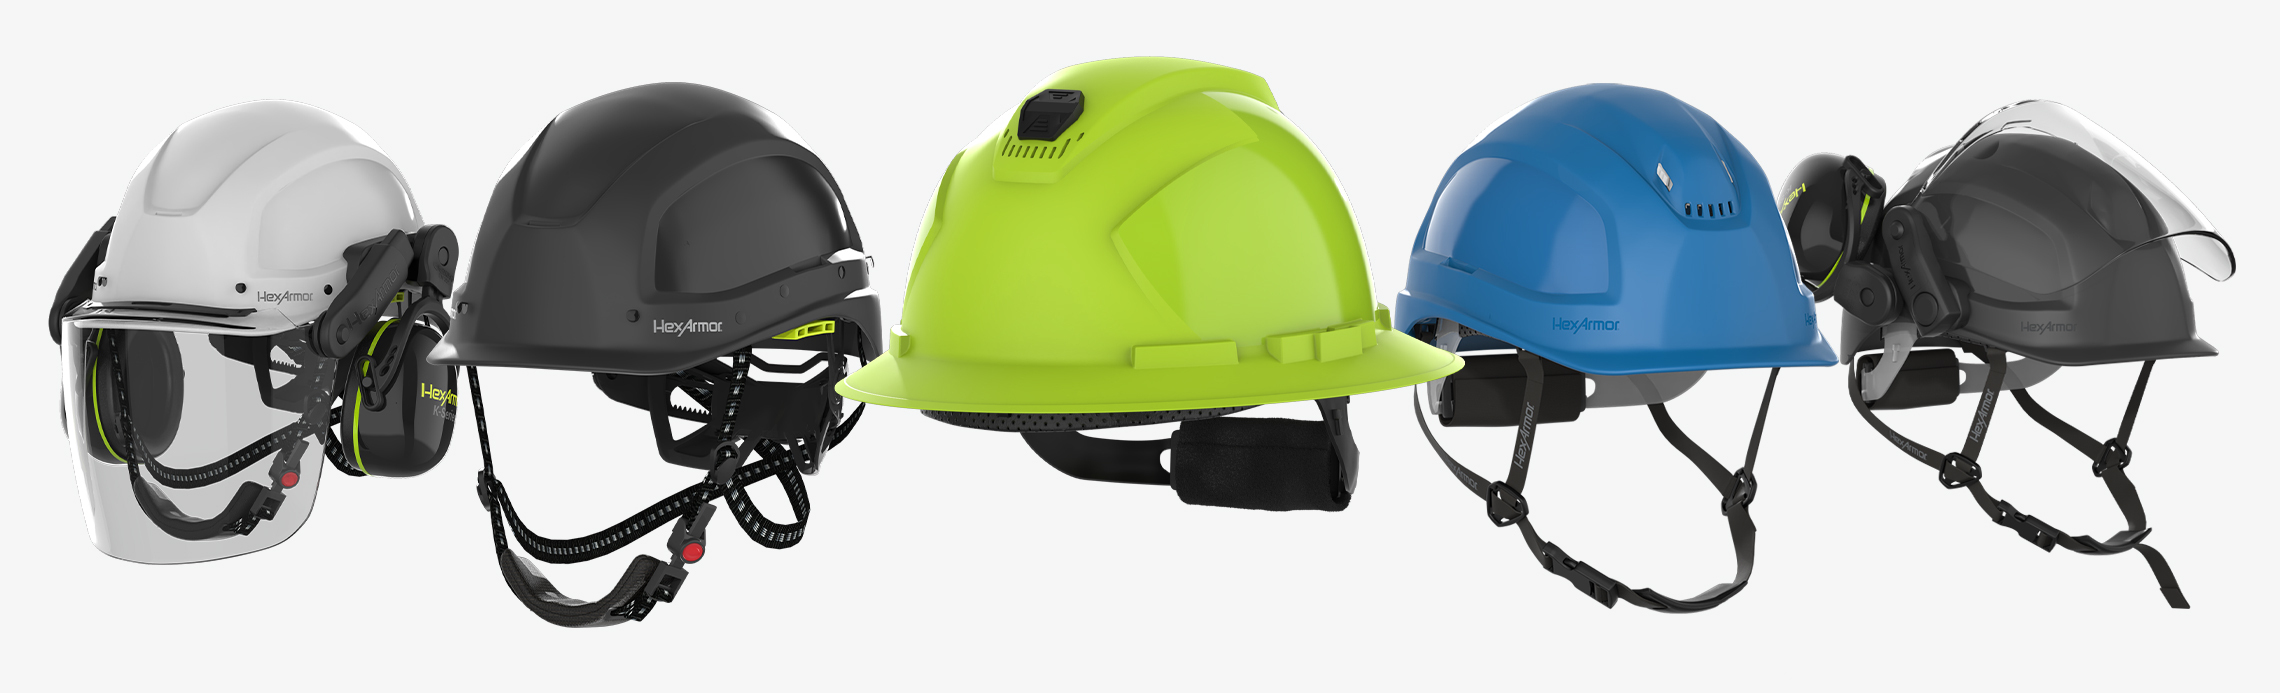 Safety helmet technology - HexArmor